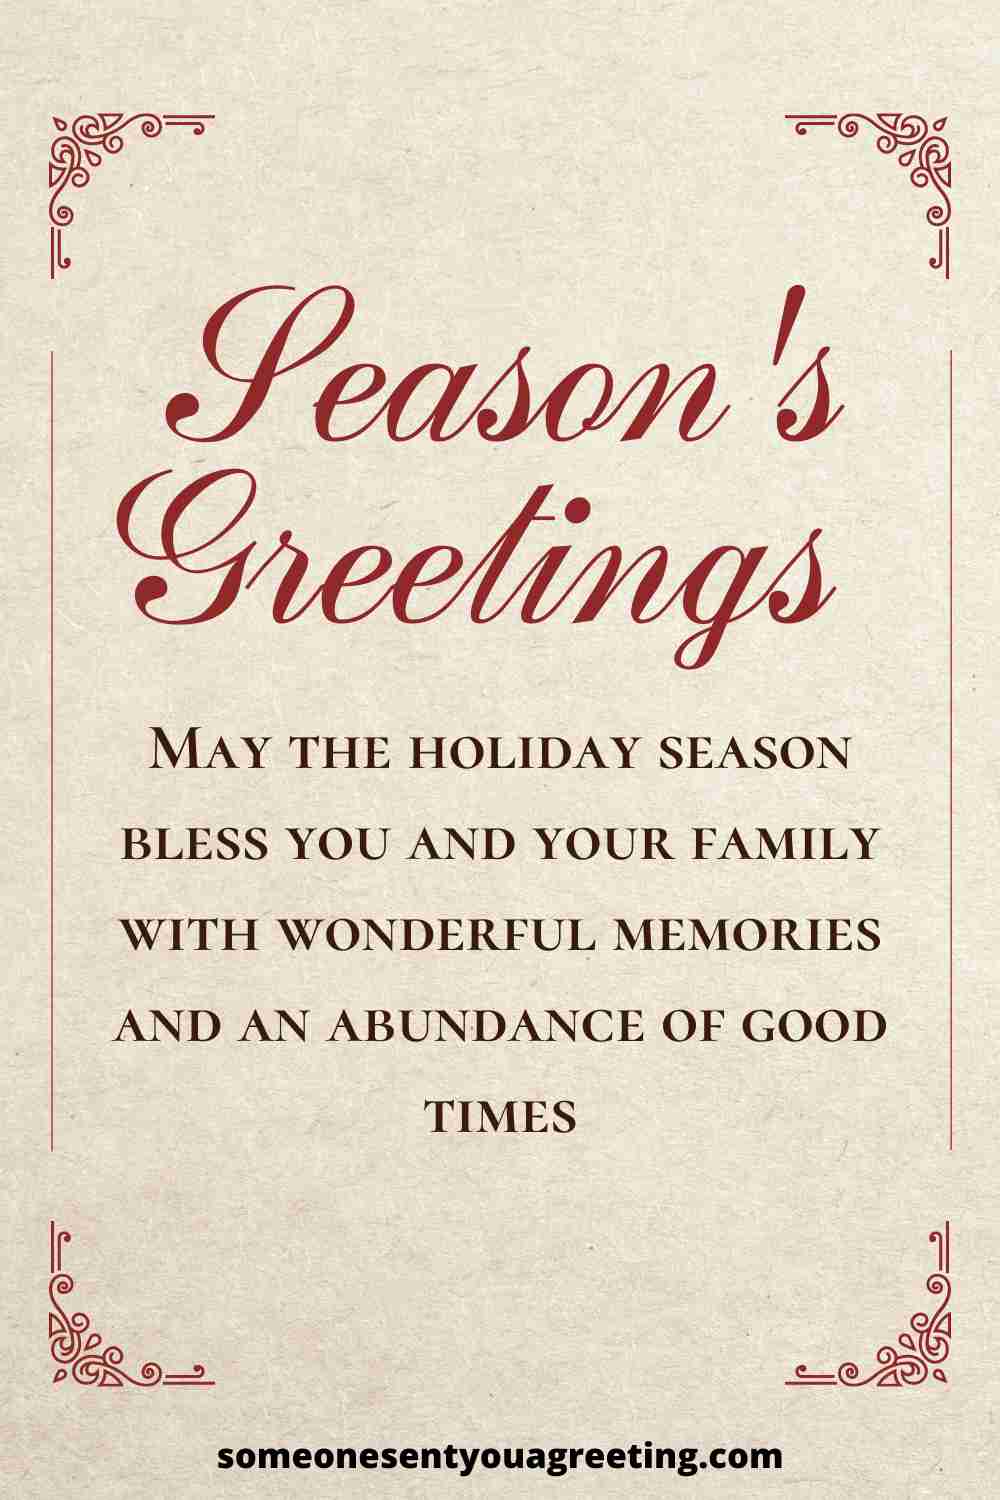 season's greetings wishes